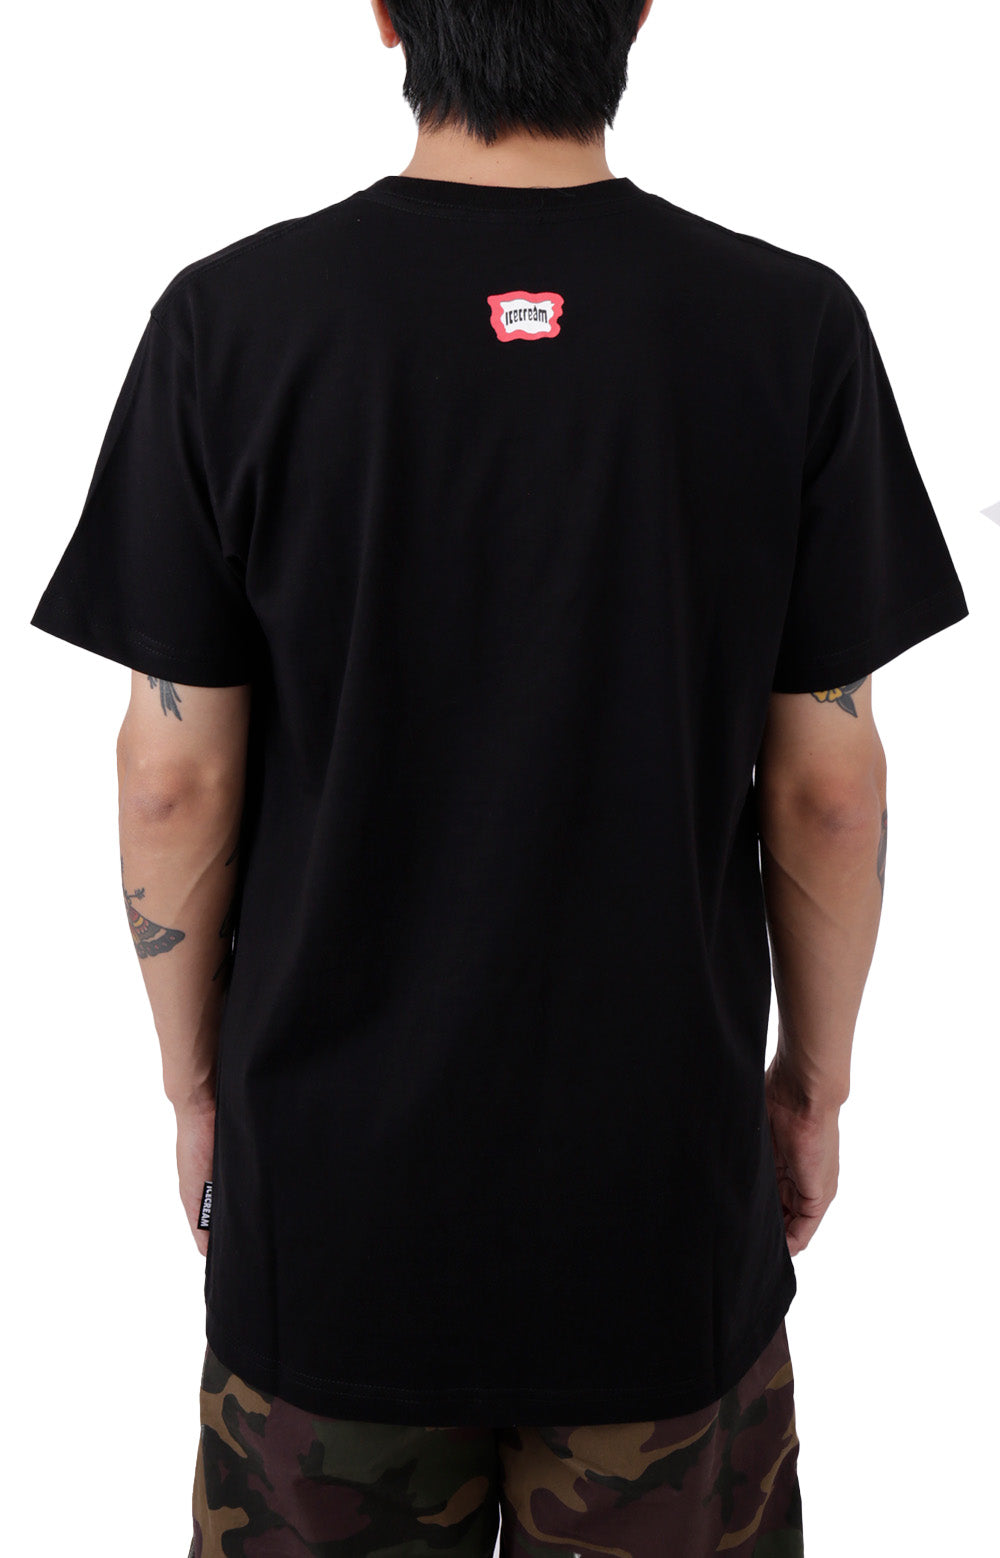 Monstar T-Shirt - Black